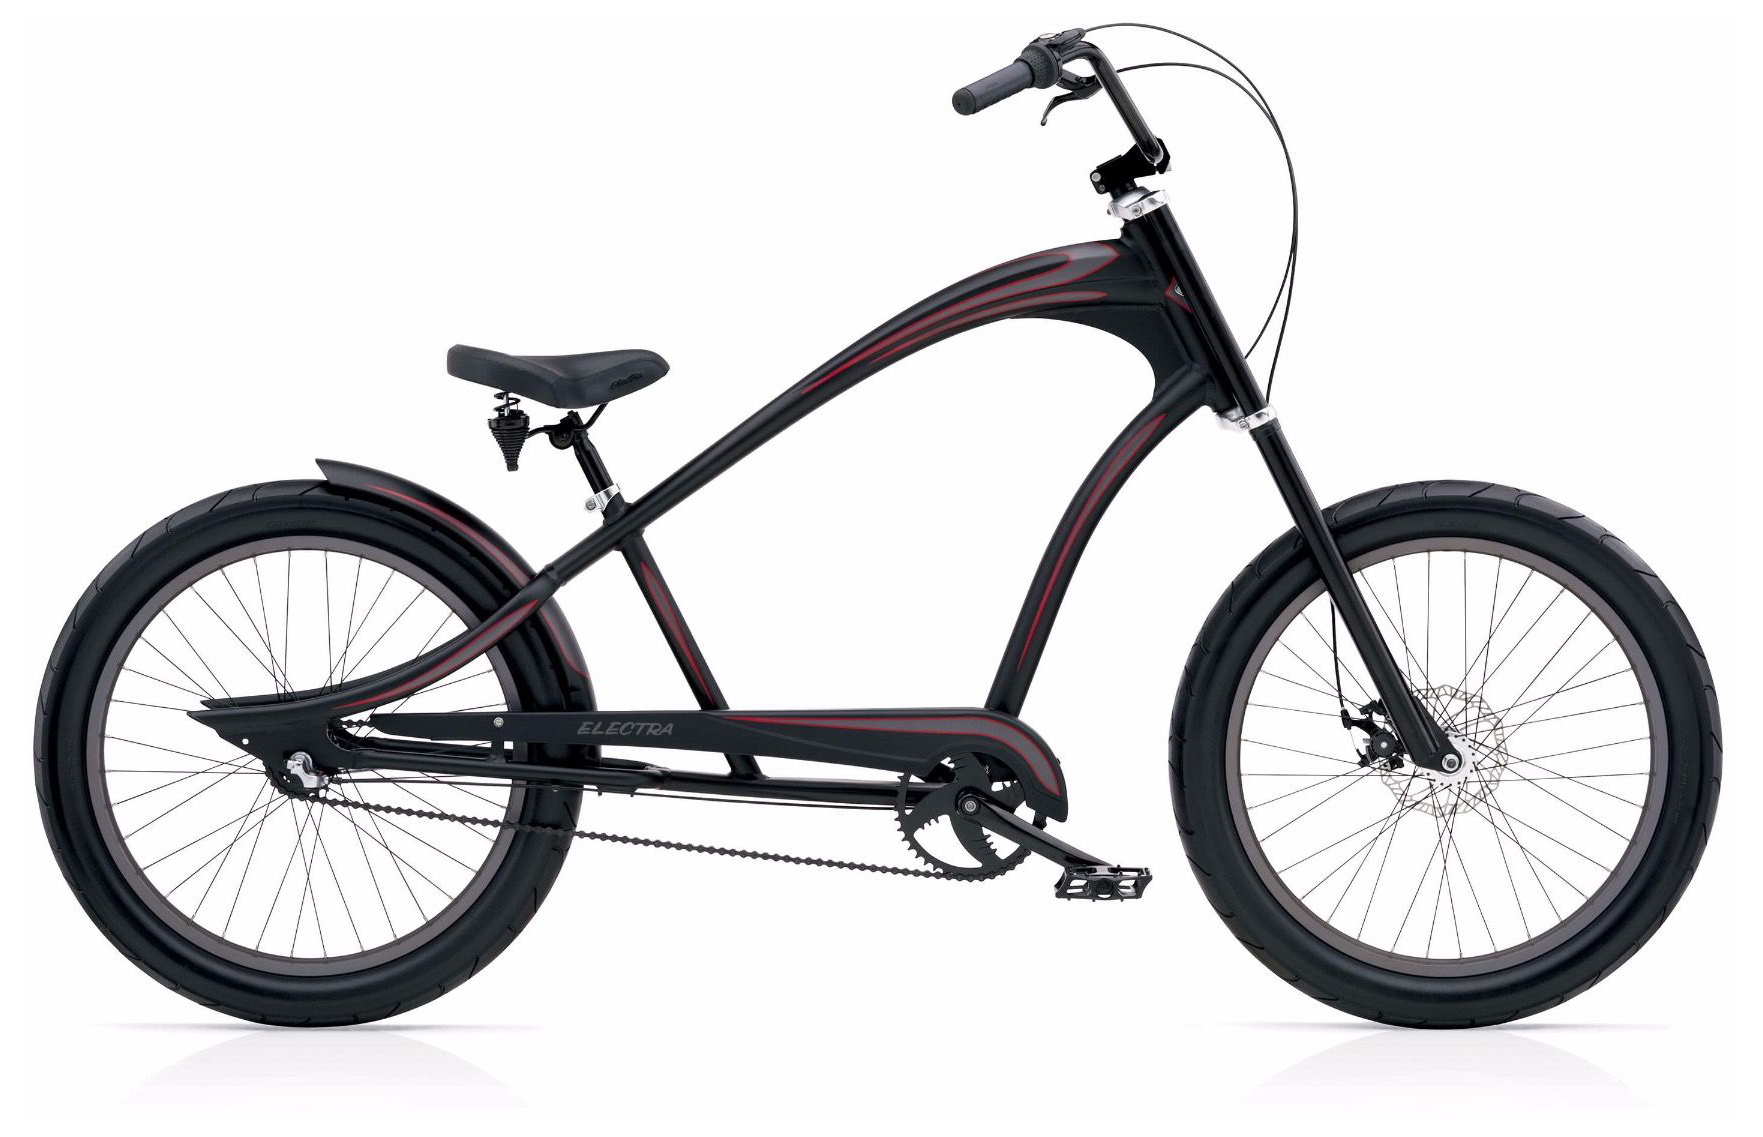  Велосипед Electra Revil 3i 2019